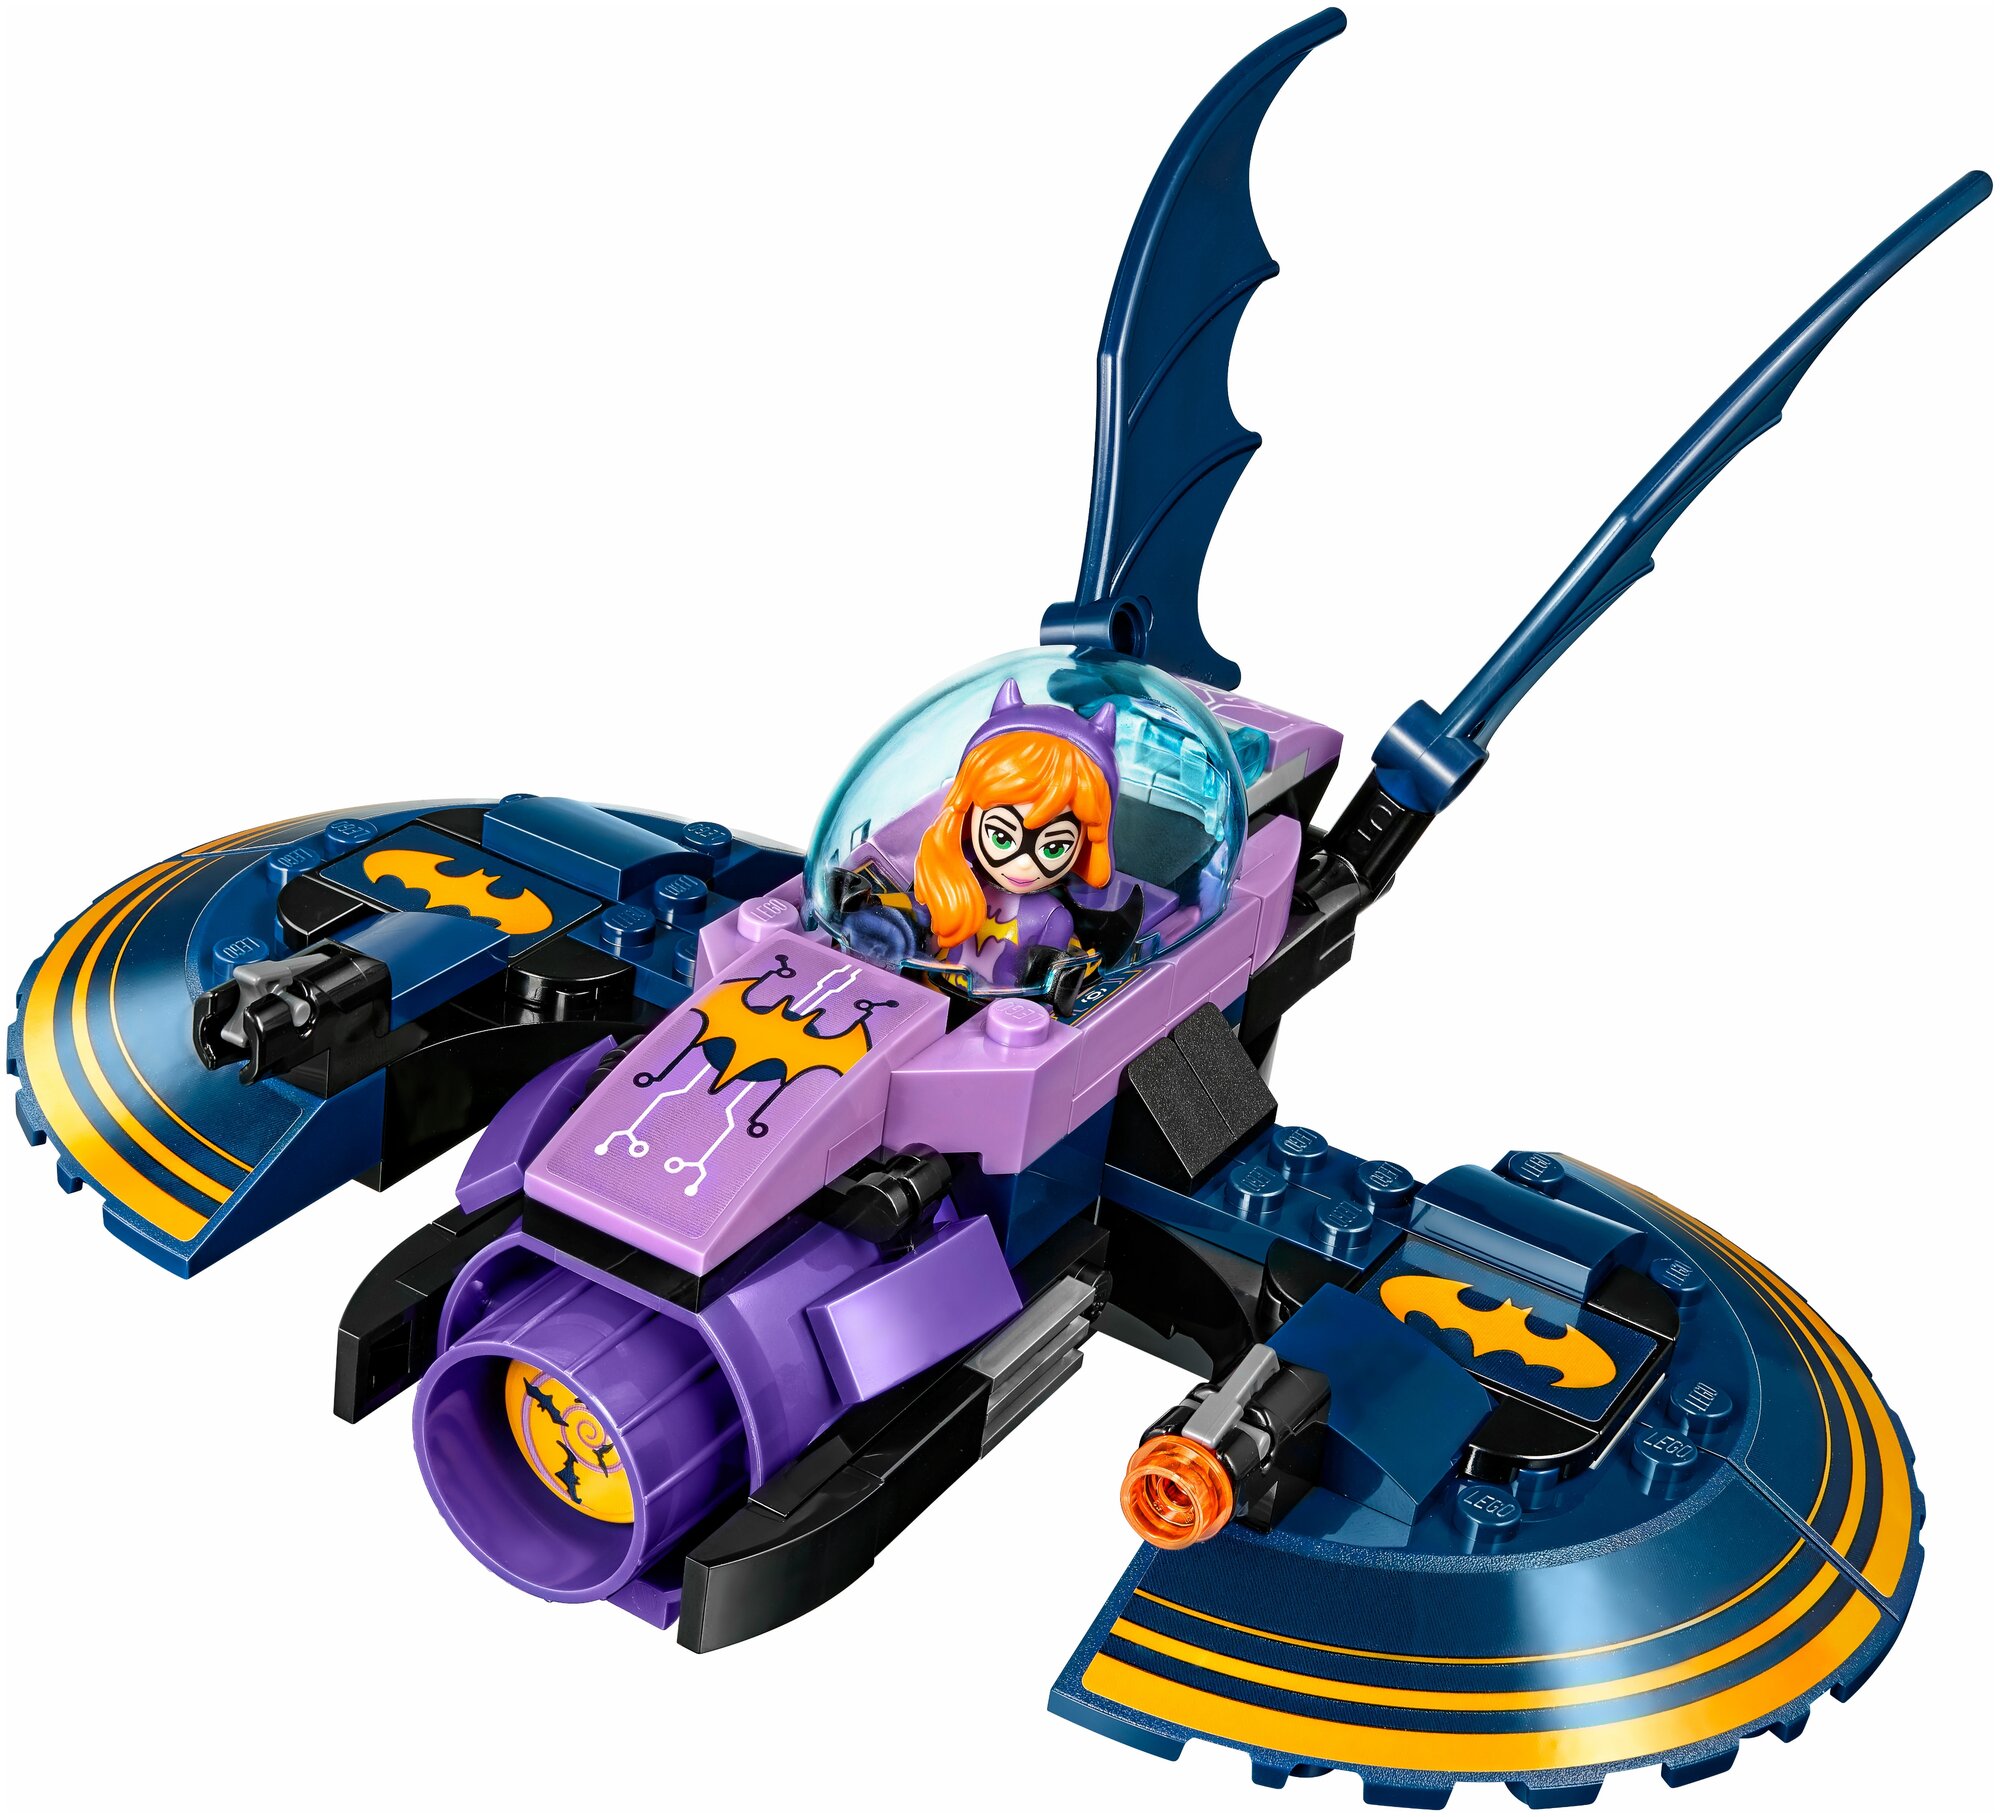 LEGO DC Super Hero Girls Бэтгёрл: погоня на реактивном самолёте - фото №16